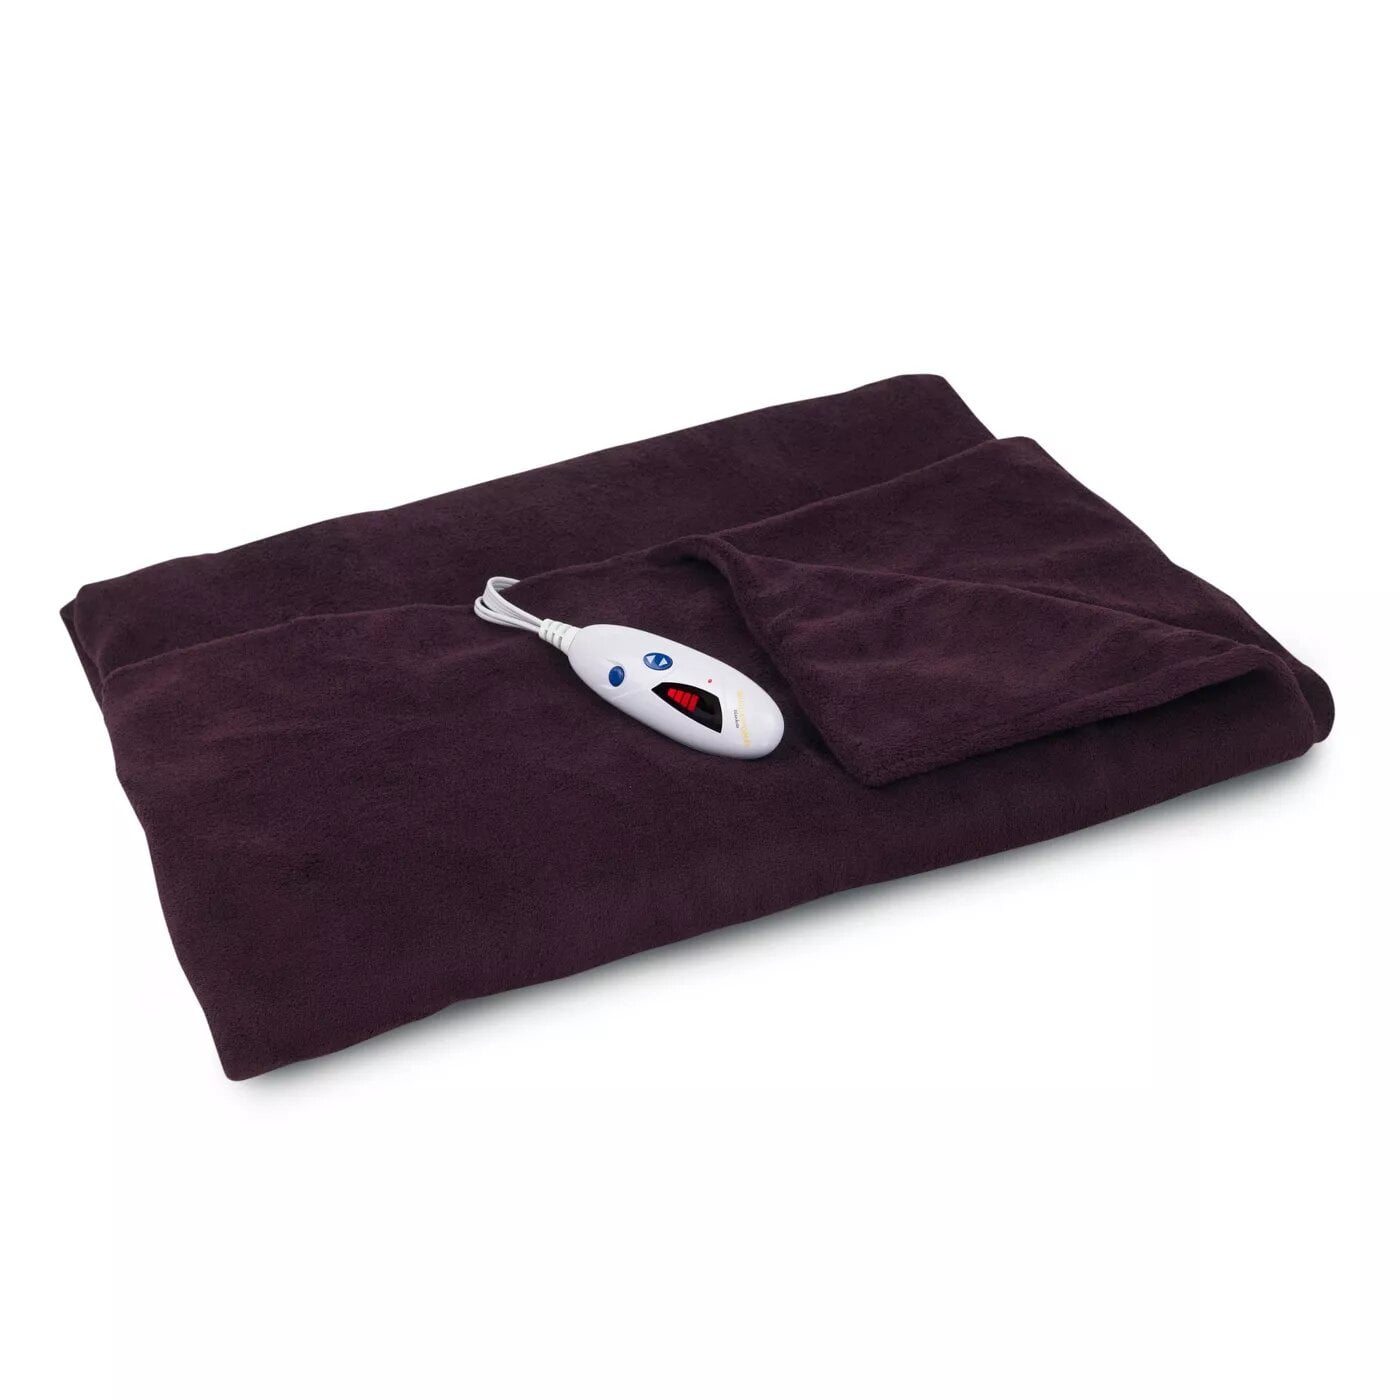 Biddeford Blanket 62 X 50 Inches Microplush Electric Throw Blanket